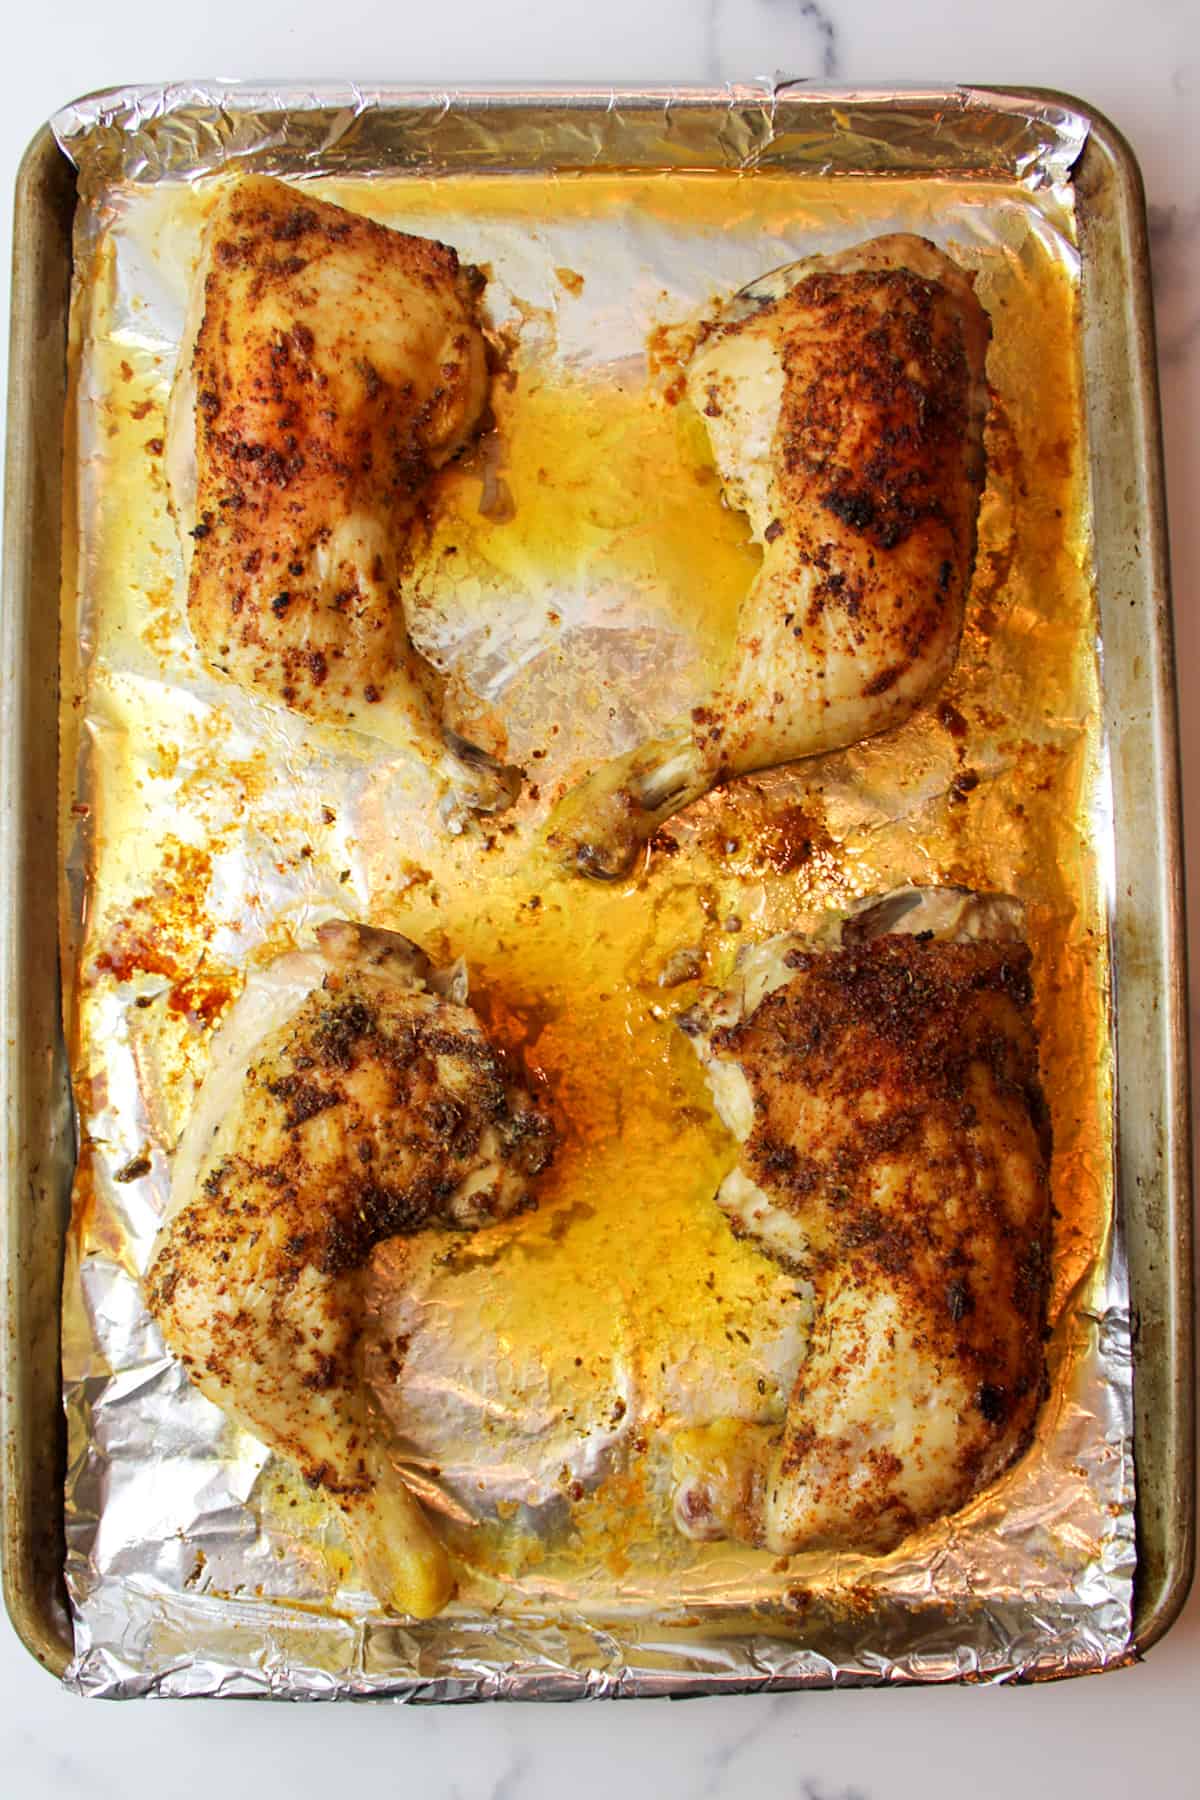 baked seasoned chicken quarters on a foil lined baking sheet.